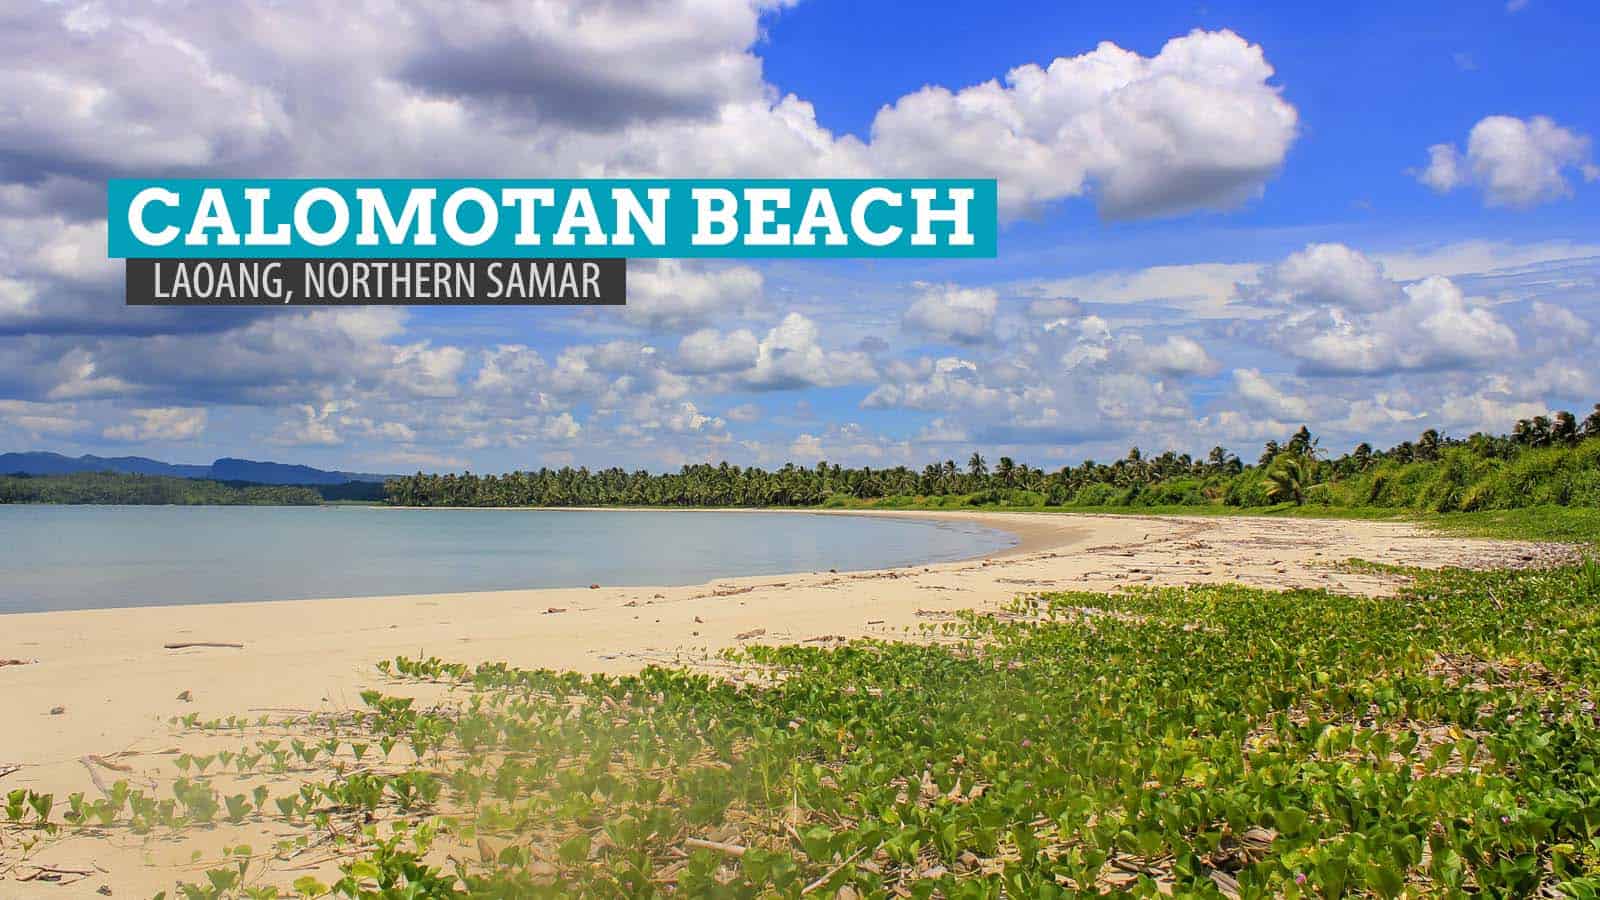 Calomotan Beach: A Cloistered Calm in Laoang, Northern Samar, Philippines